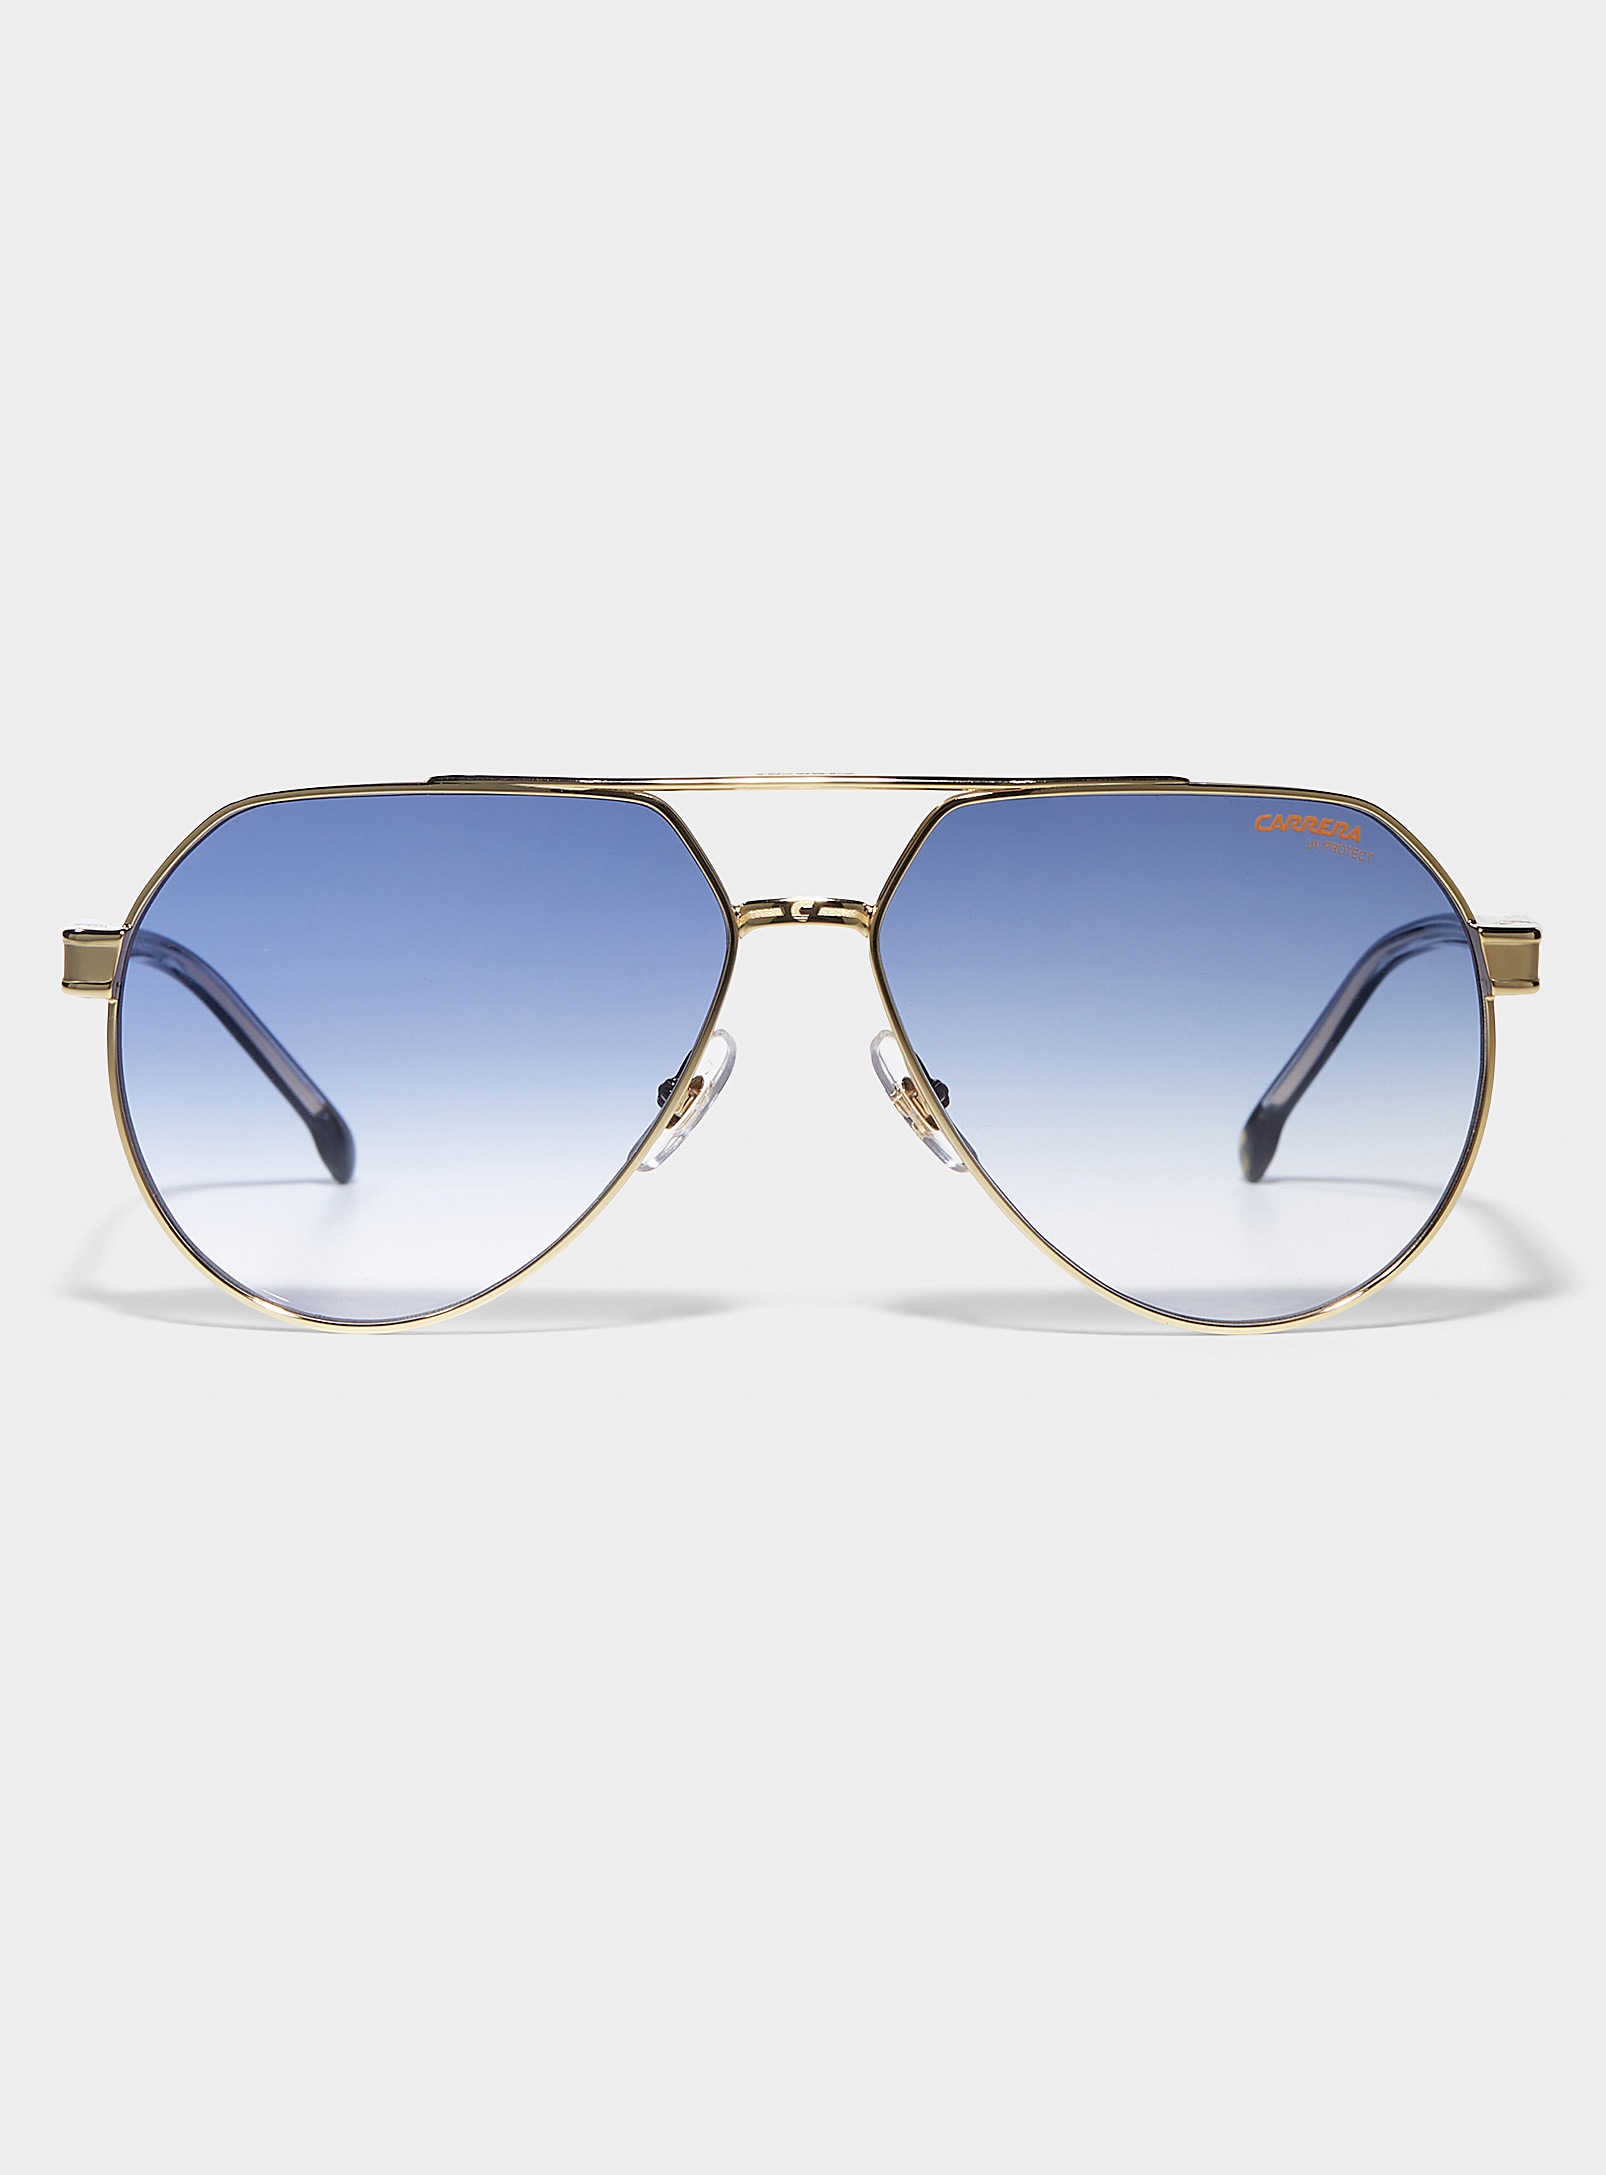 Carrera - Men's Blue lens aviator sunglasses